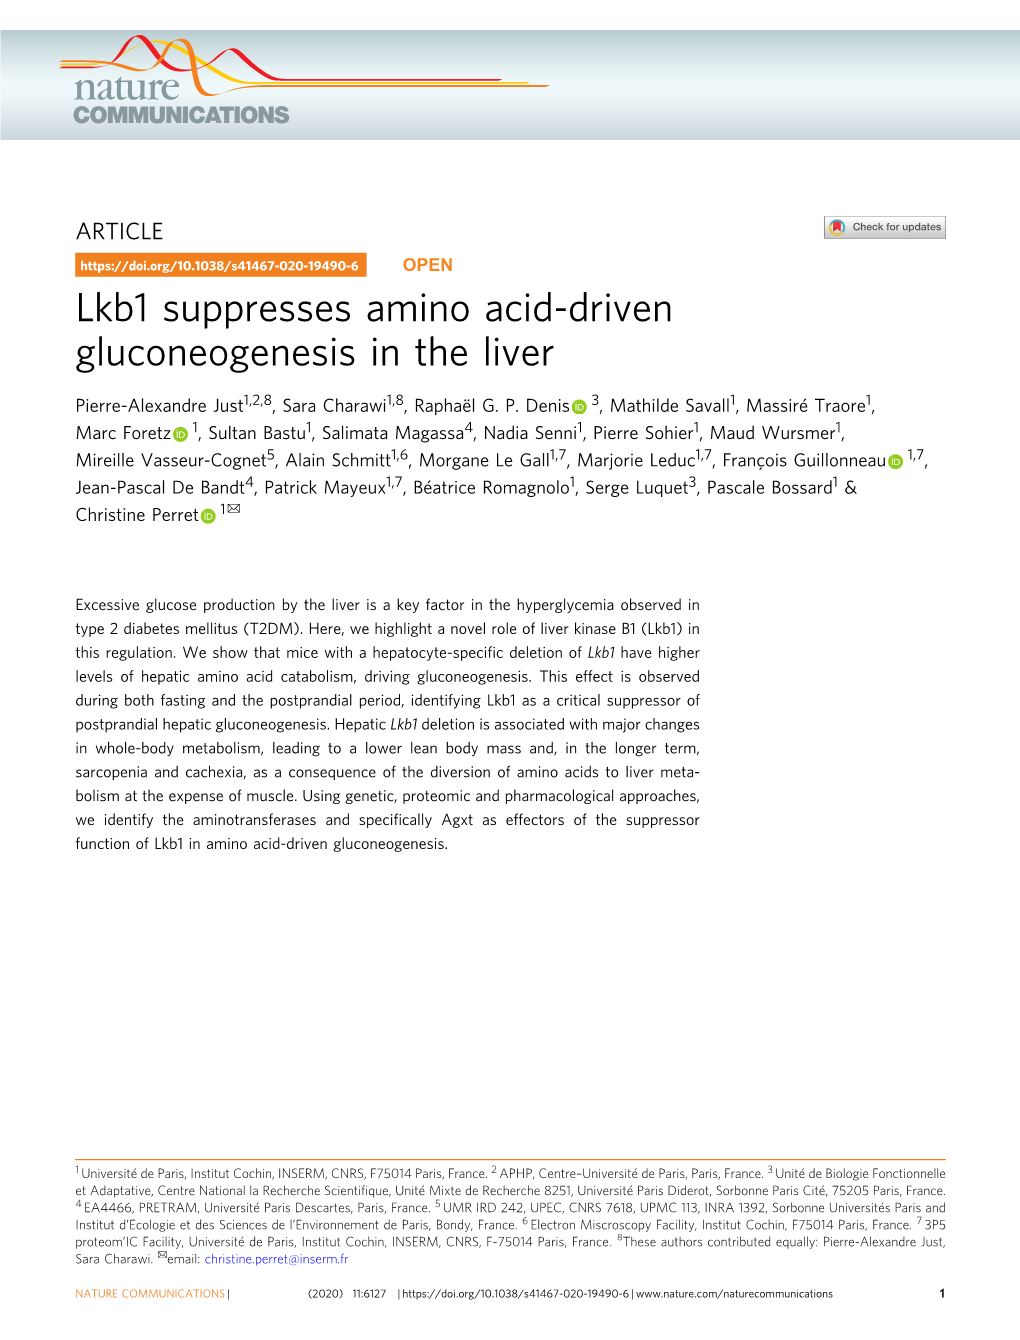 Lkb1 Suppresses Amino Acid-Driven Gluconeogenesis in the Liver